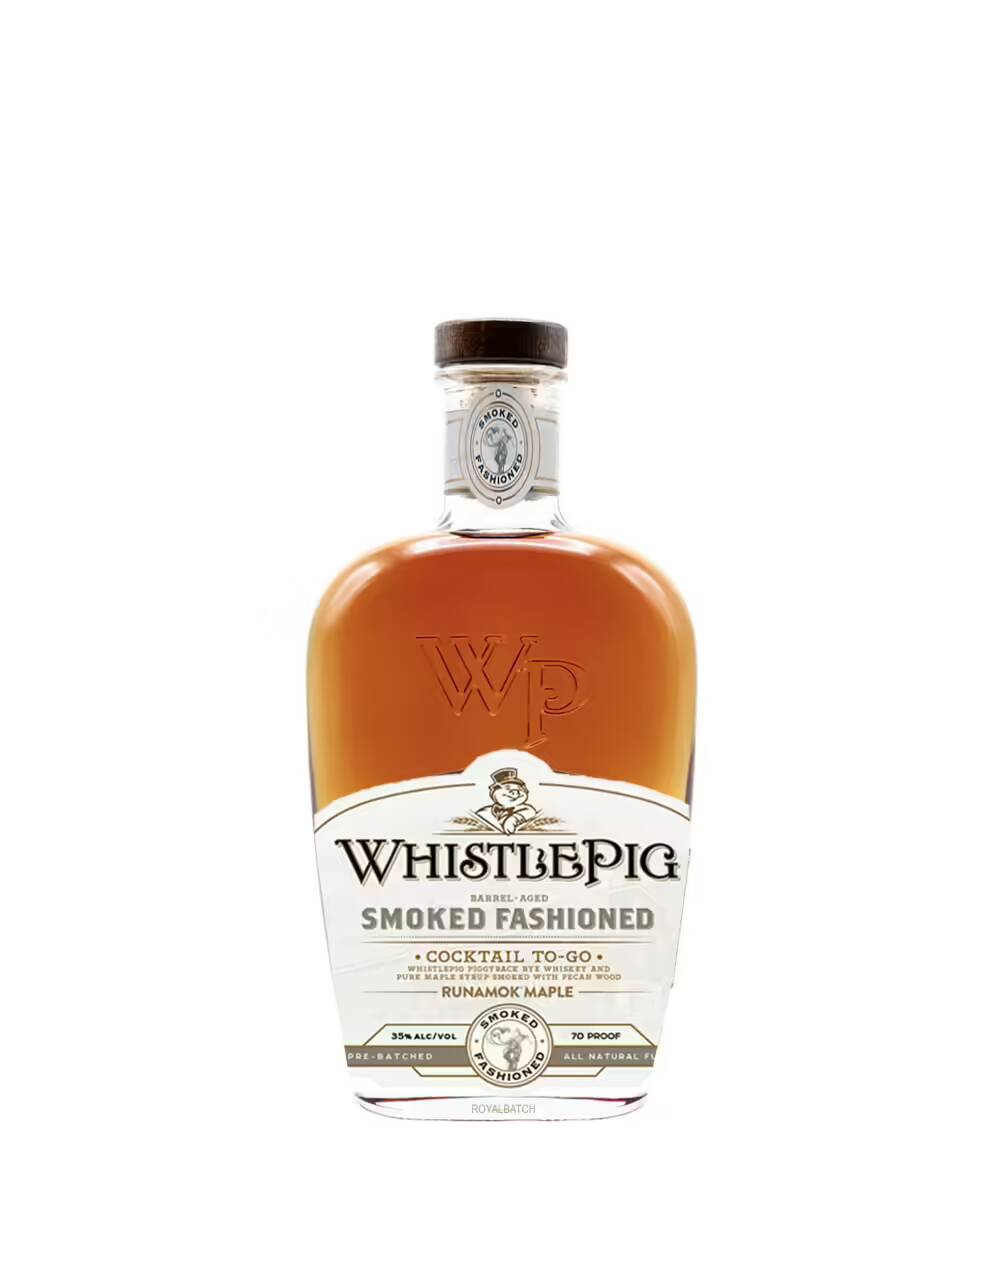 WhistlePig Smoked Fashioned Cocktail To Go Runamok Maple Rye Whiskey 375ml